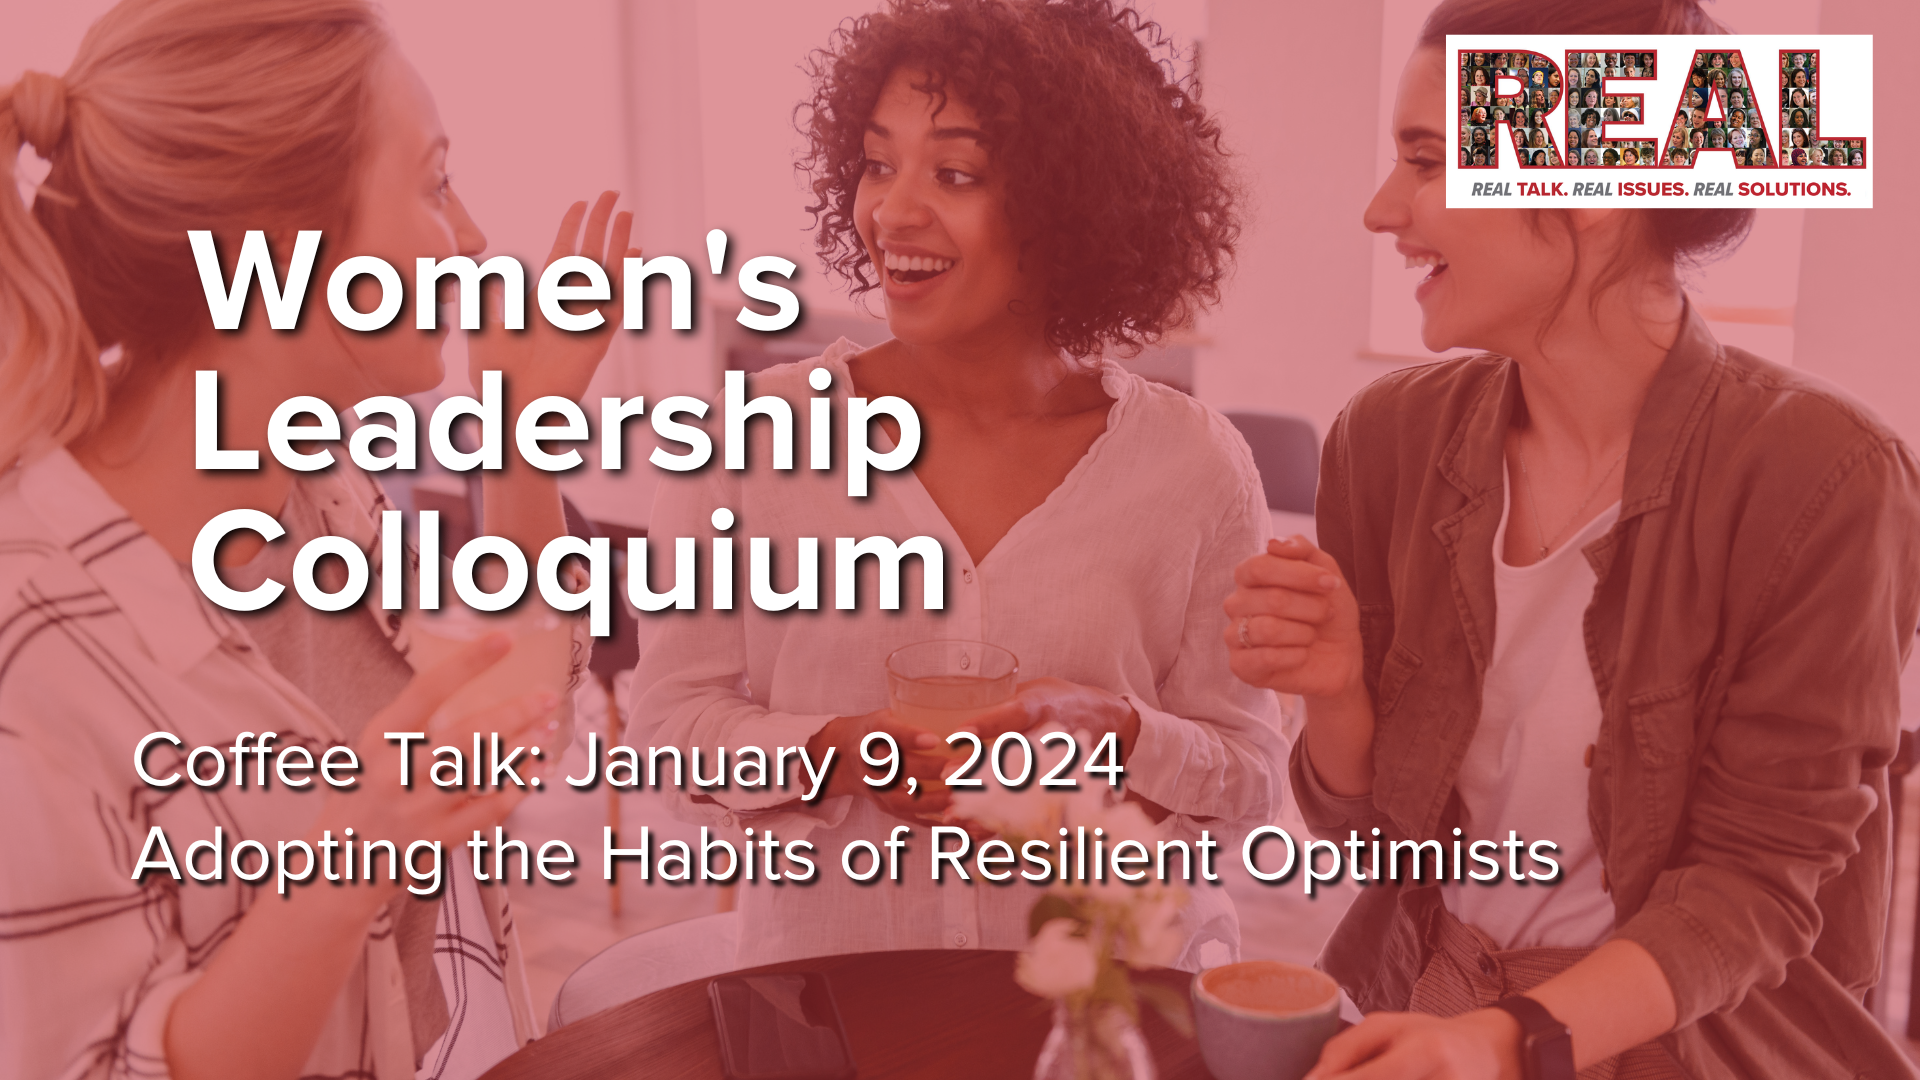 Women’s Leadership Colloquium at UMW: January Coffee Talk